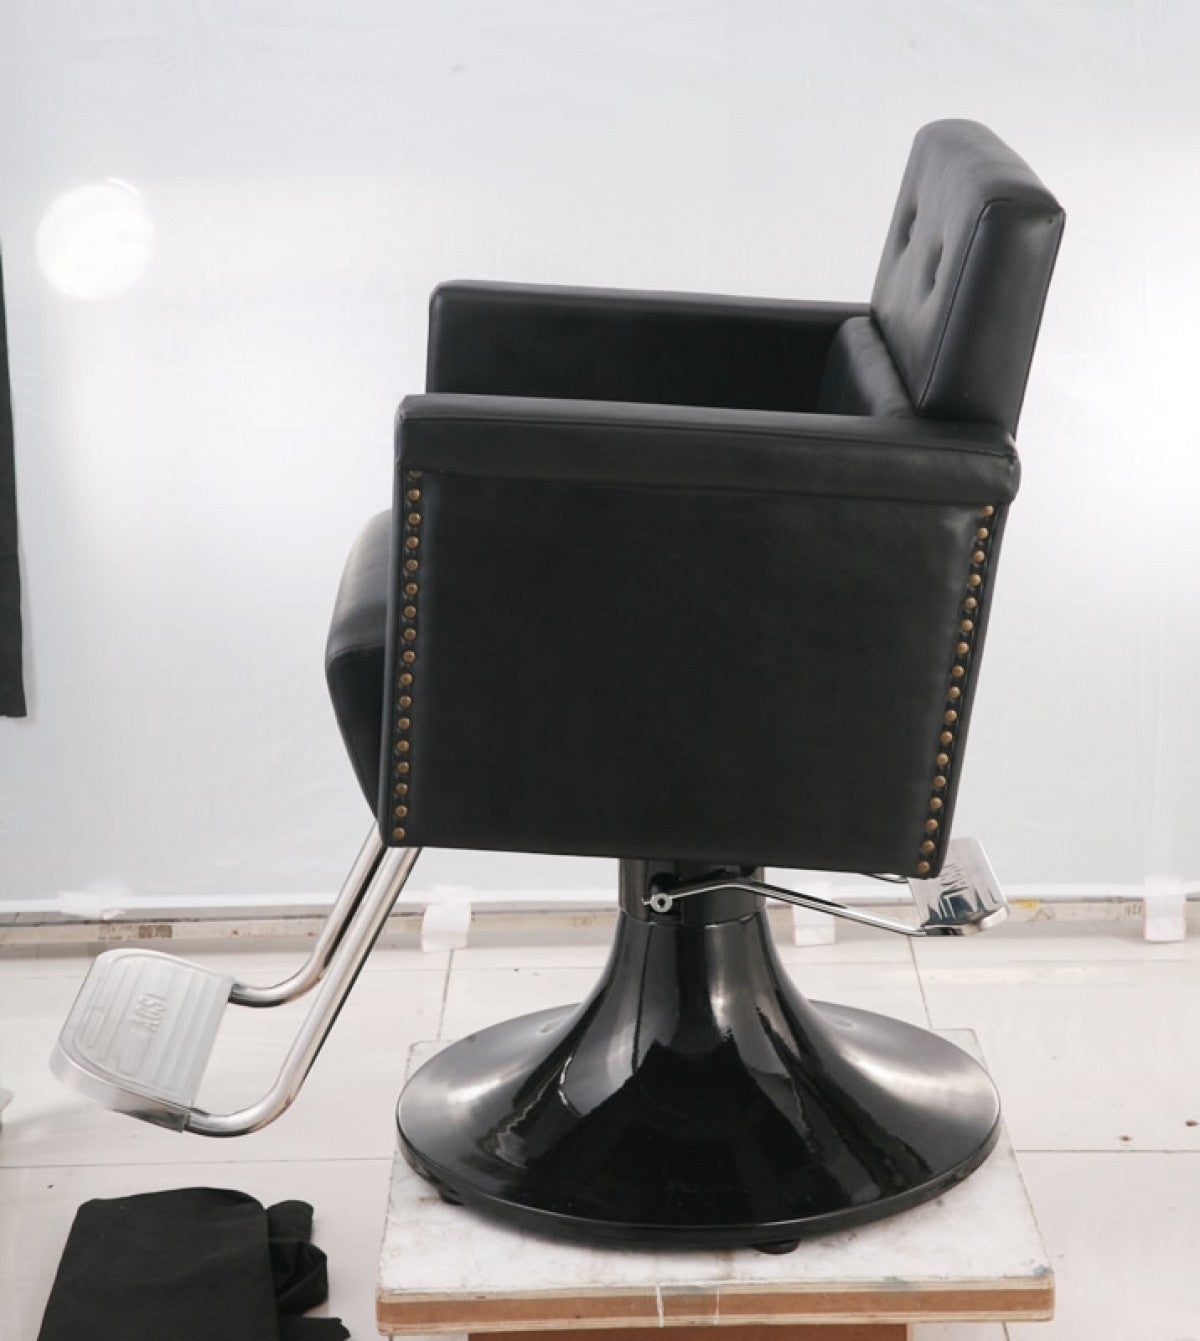 MEDICI Salon Styling Chair